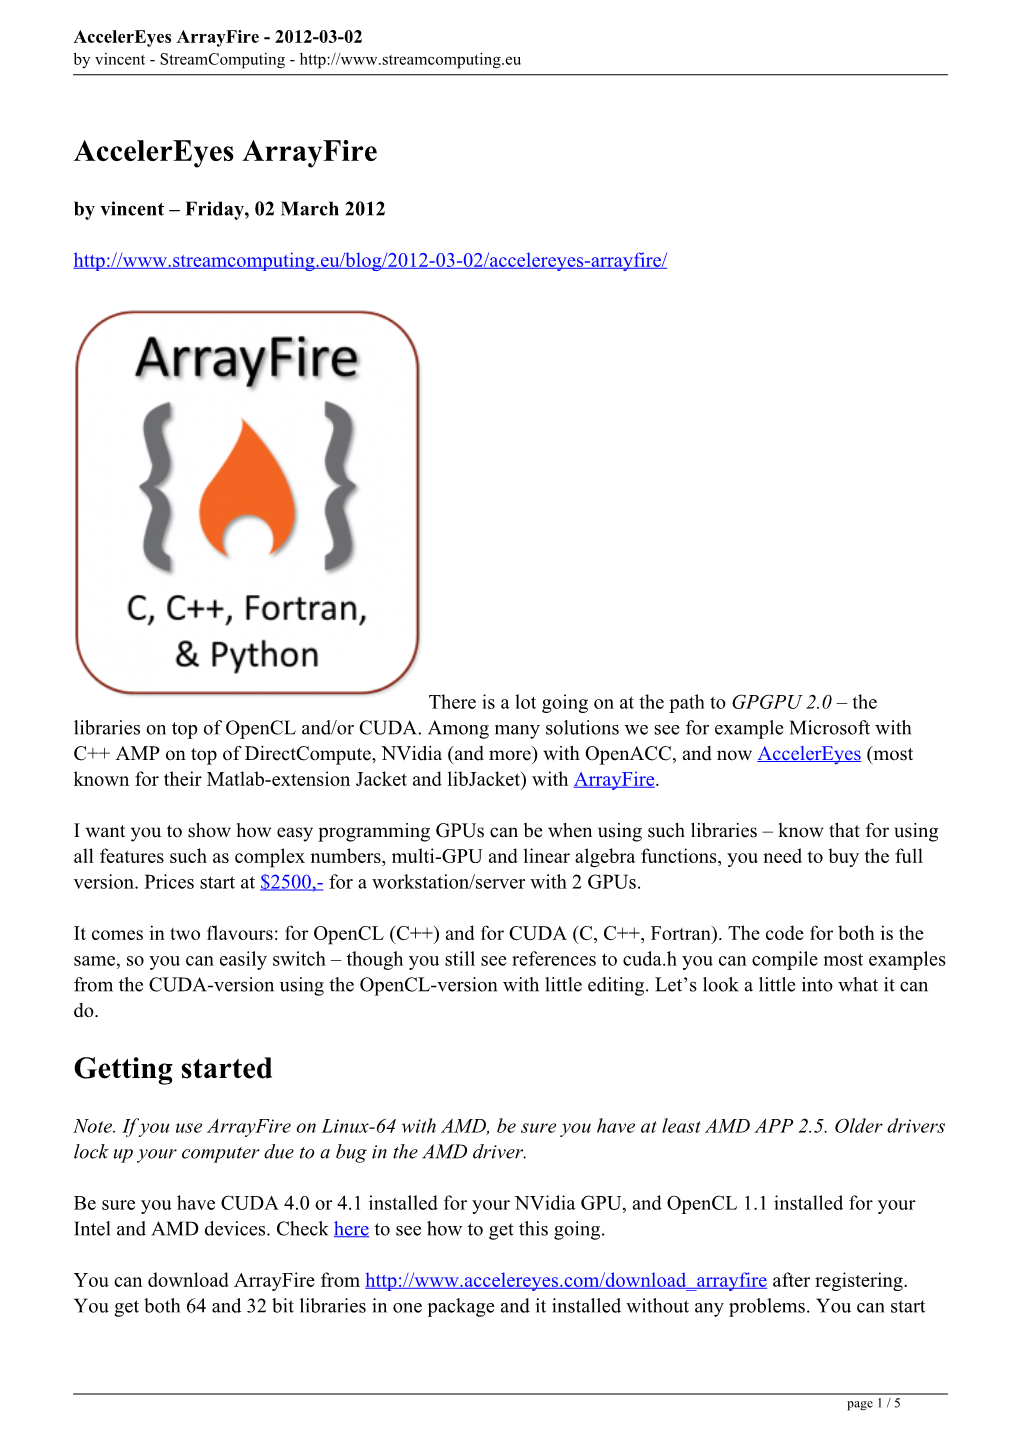 Accelereyes Arrayfire - 2012-03-02 by Vincent - Streamcomputing